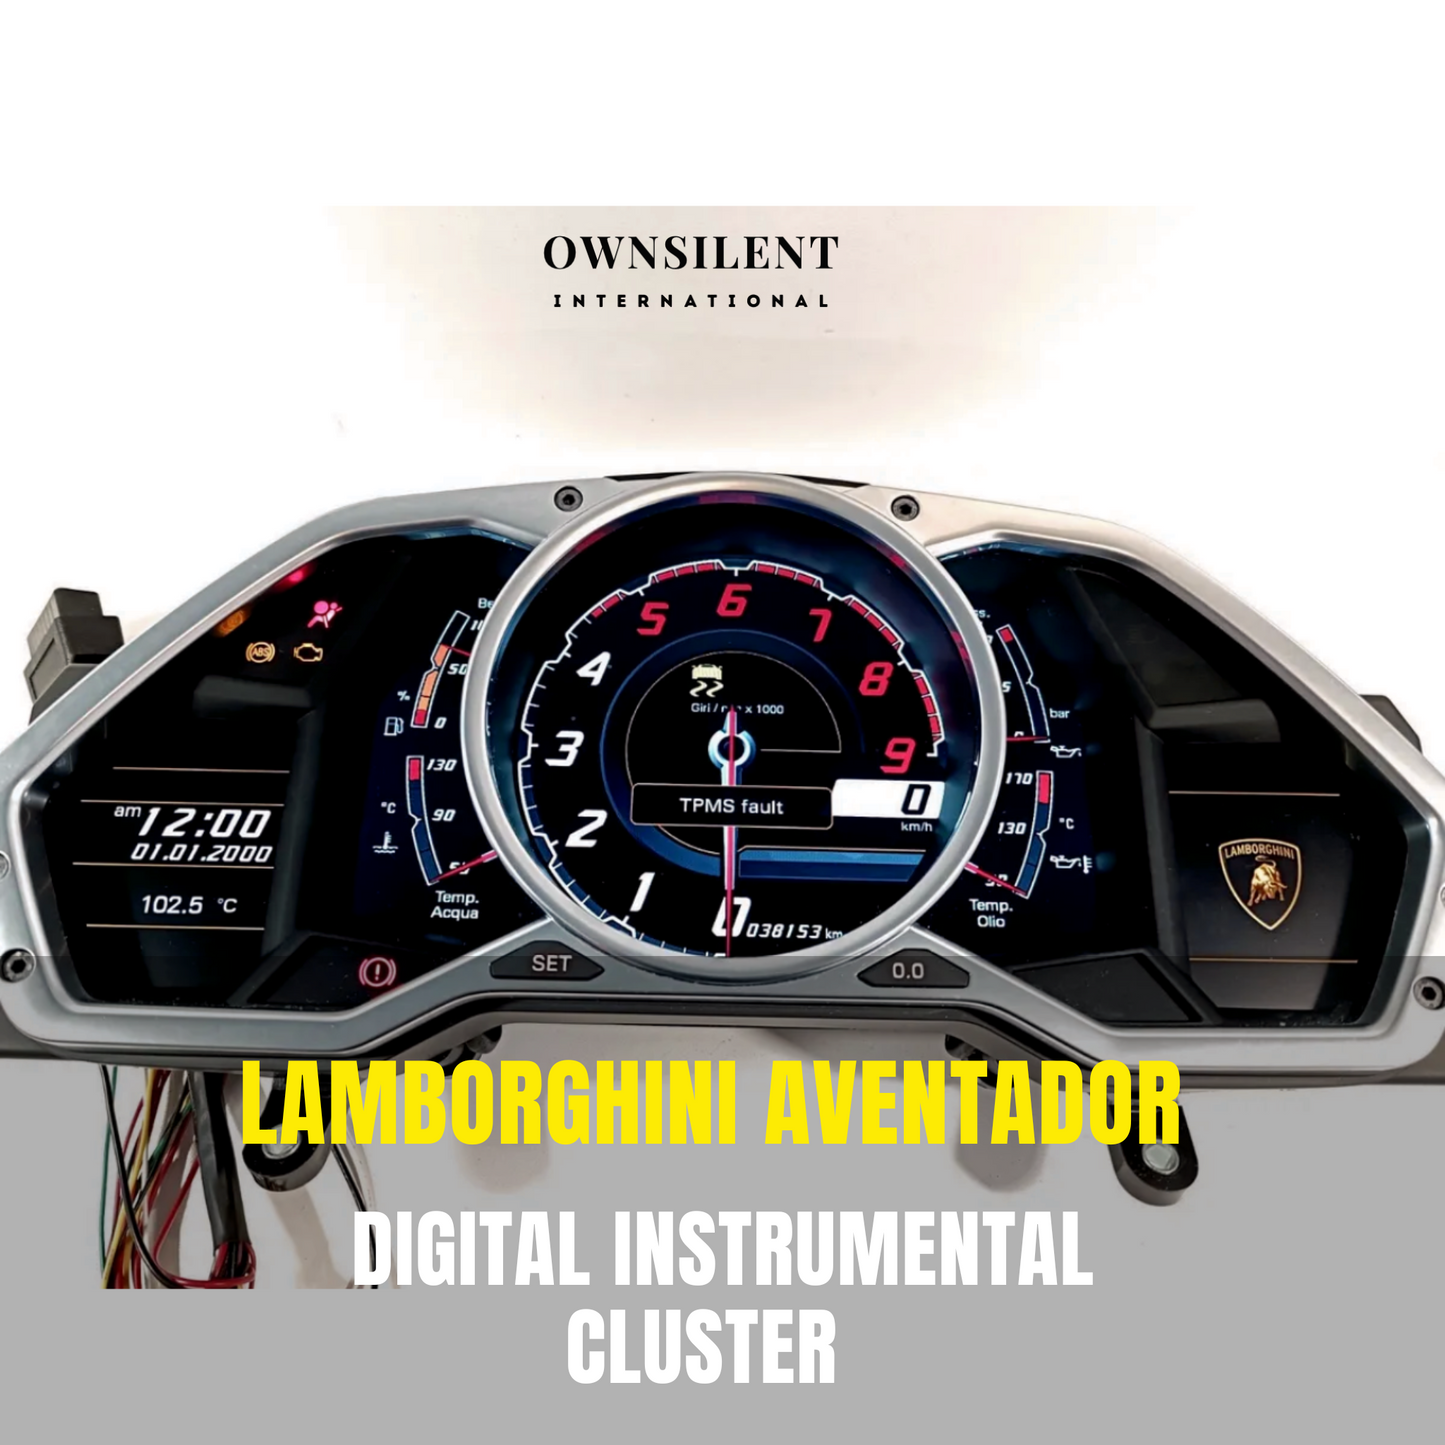 Lamborghini Aventador digital instrumental cluster